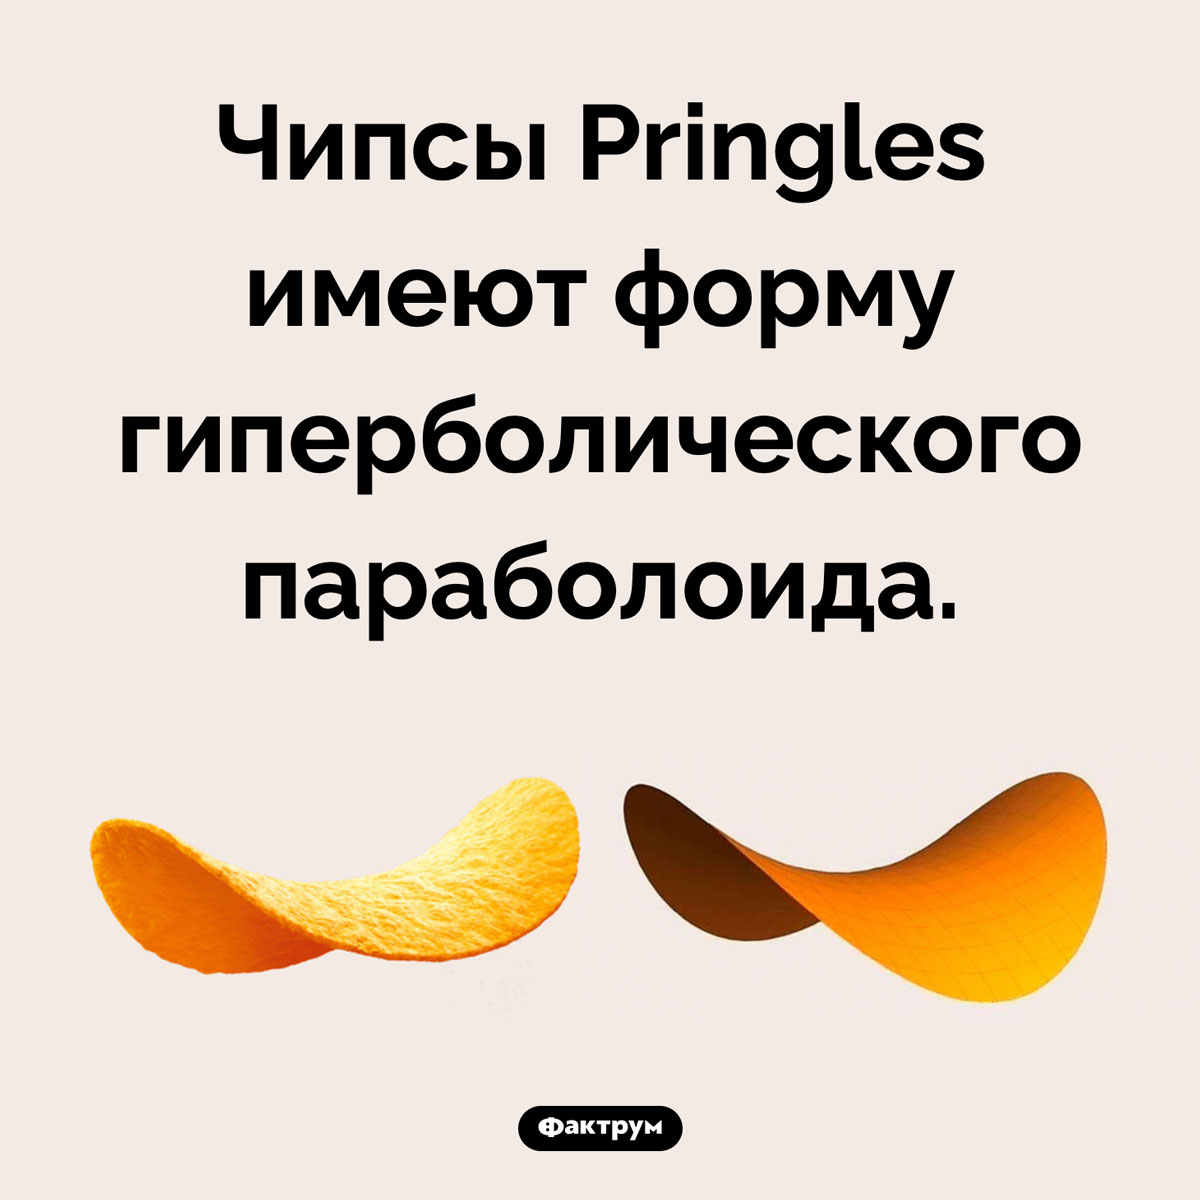 Какой формы чипсы Pringles. Чипсы Pringles имеют форму гиперболического параболоида.